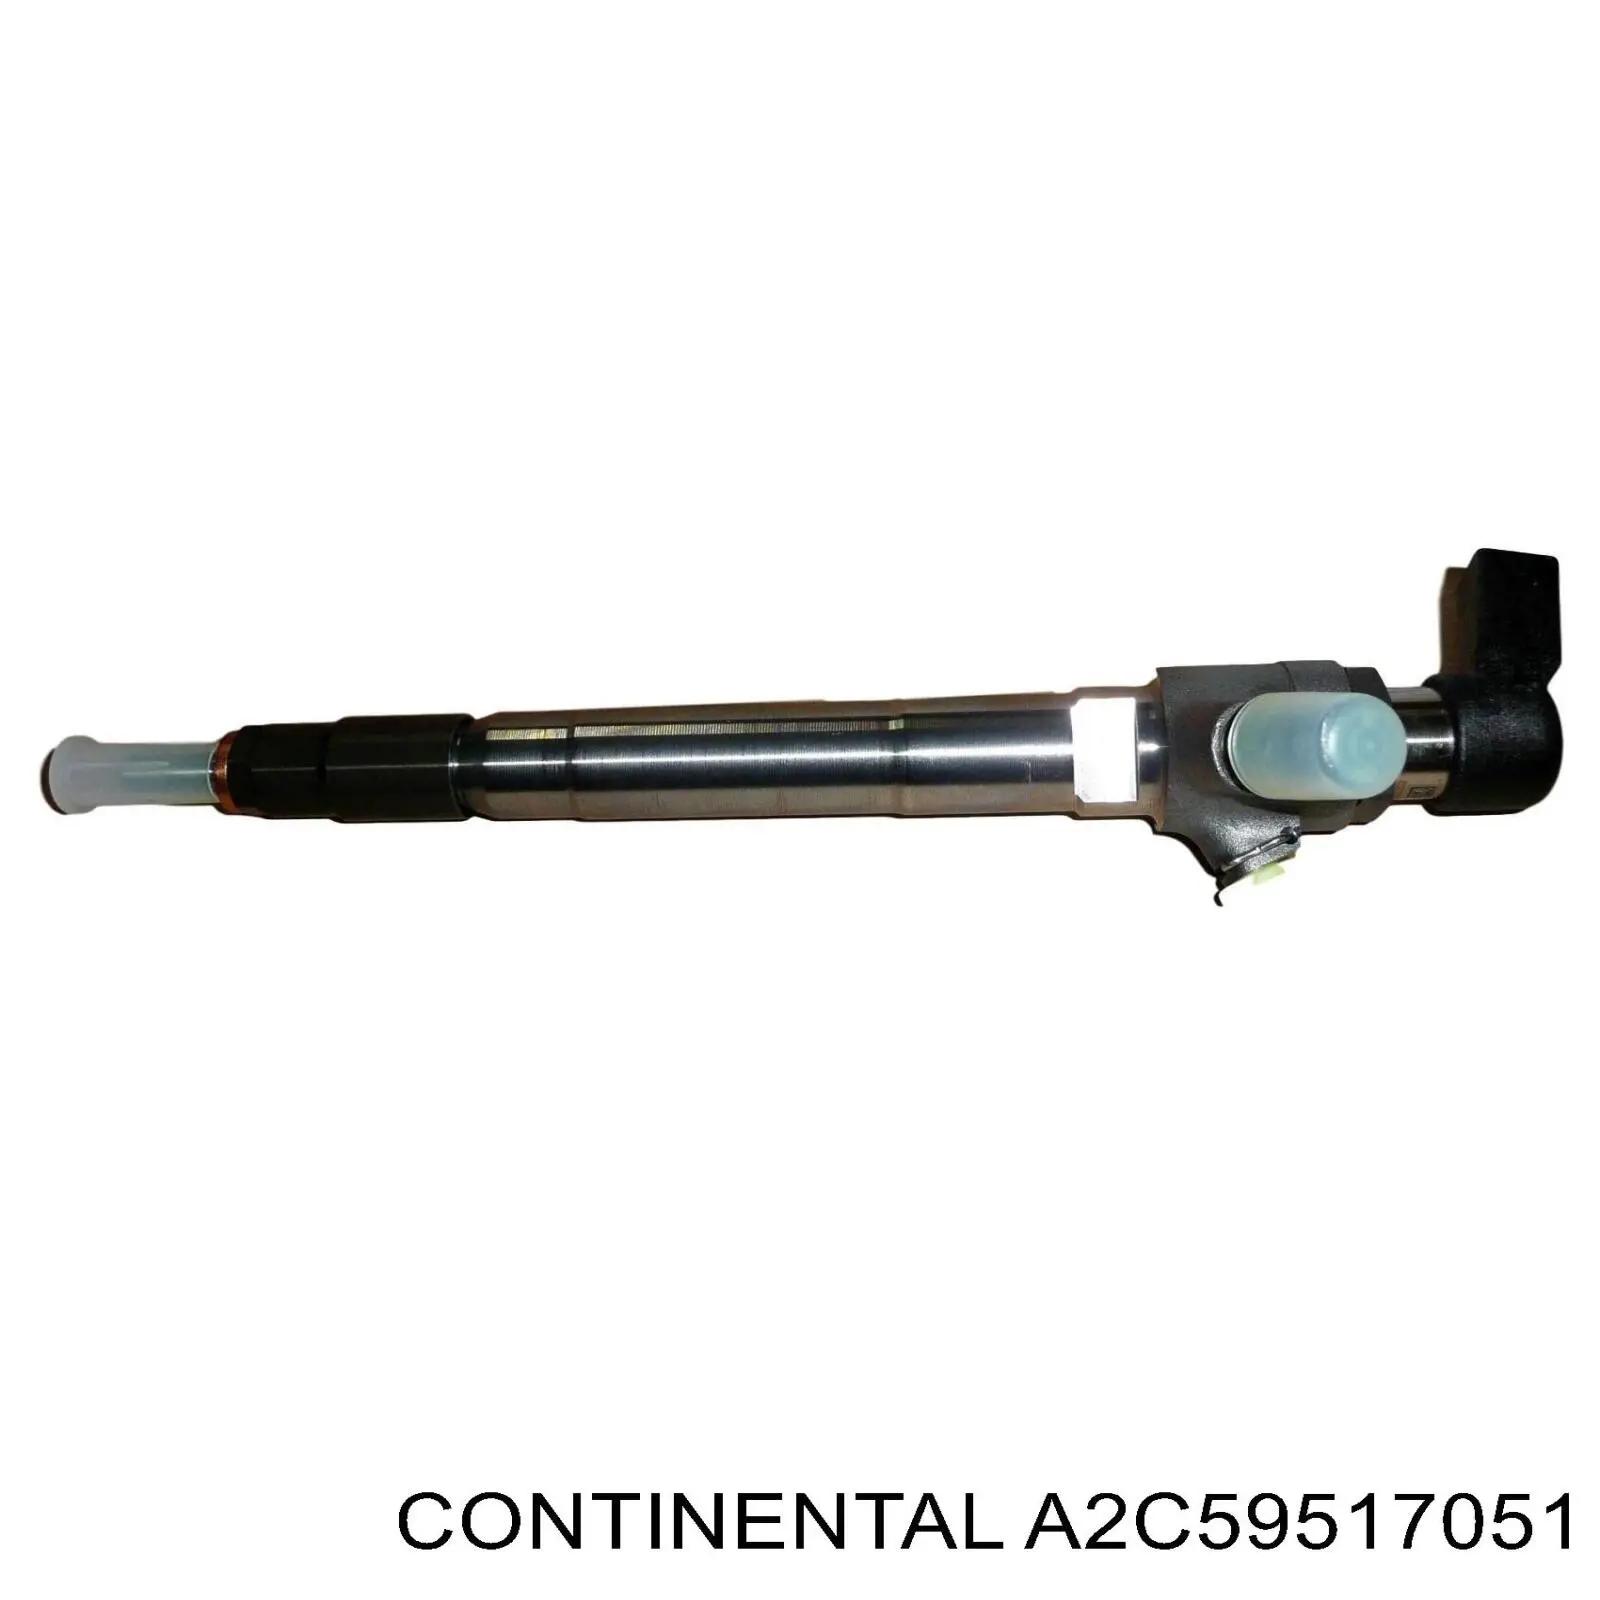 A2C59517051 Continental injetor de injeção de combustível